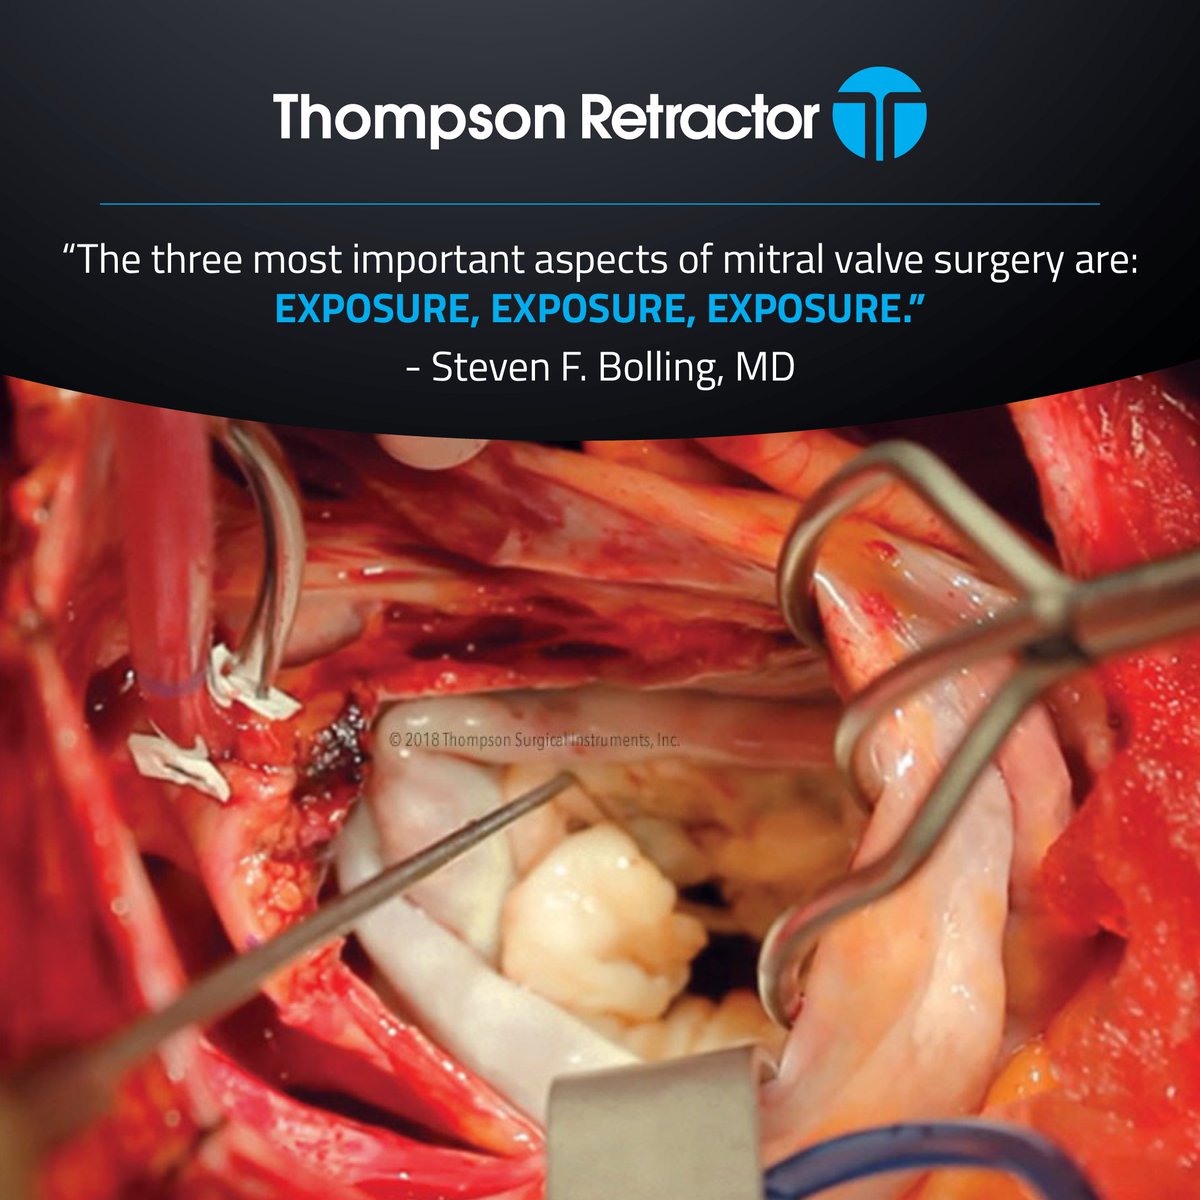 “The three most important aspects of mitral valve surgery are: EXPOSURE, EXPOSURE, EXPOSURE.” - Steven F. Bolling, MD.
#cardiothoracicsurgery #cardiothoracicsurgeon #mitralvalve #thompsonretractor